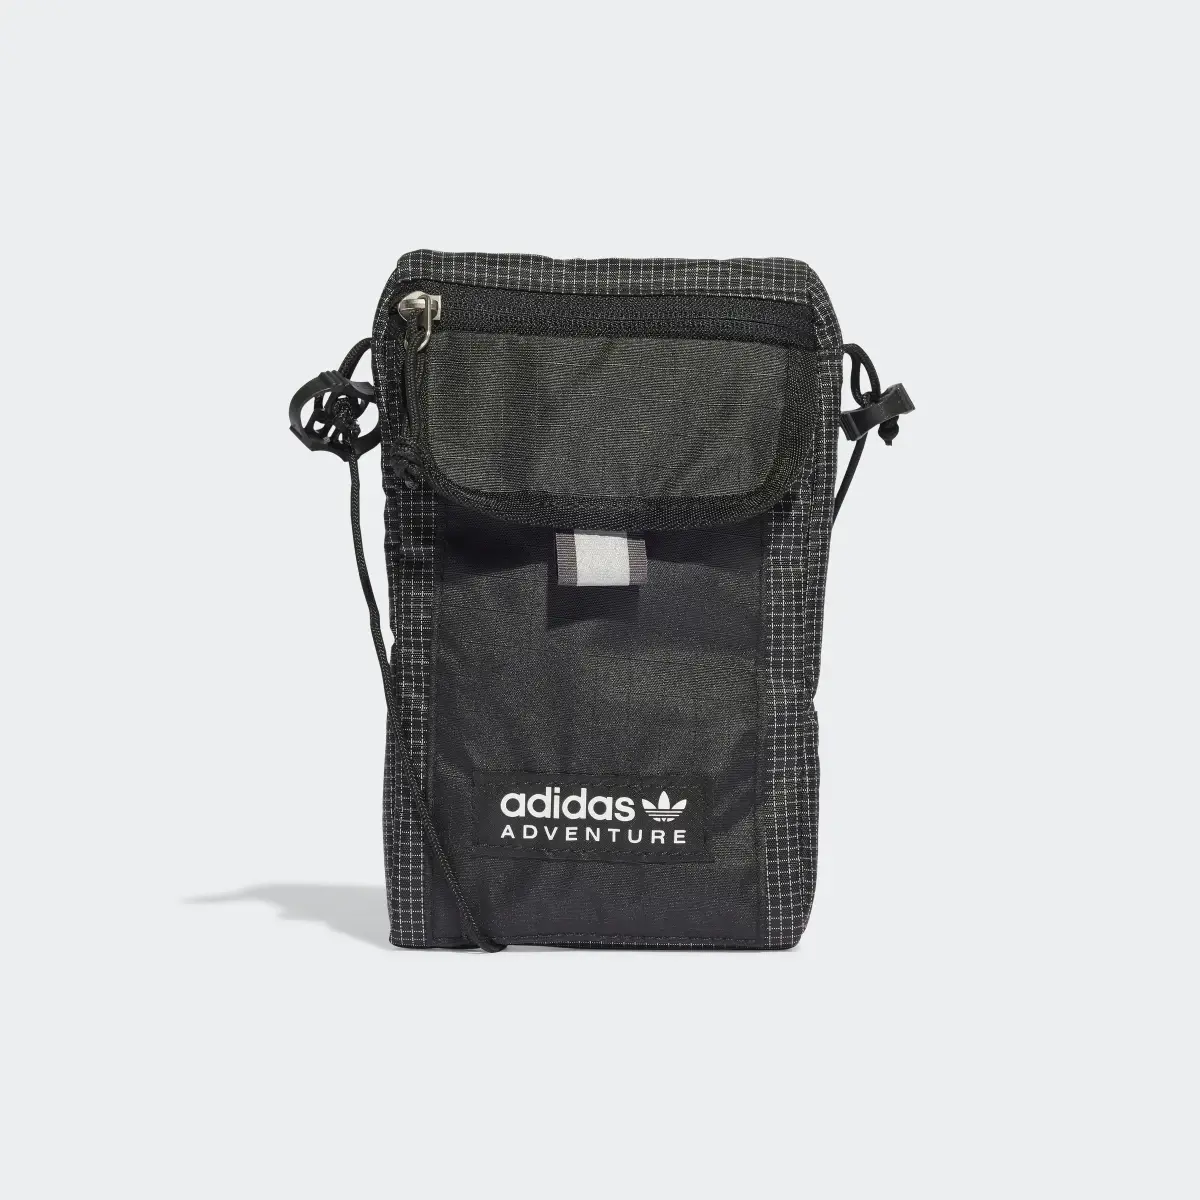 Adidas Adventure Flag Bag Small. 2